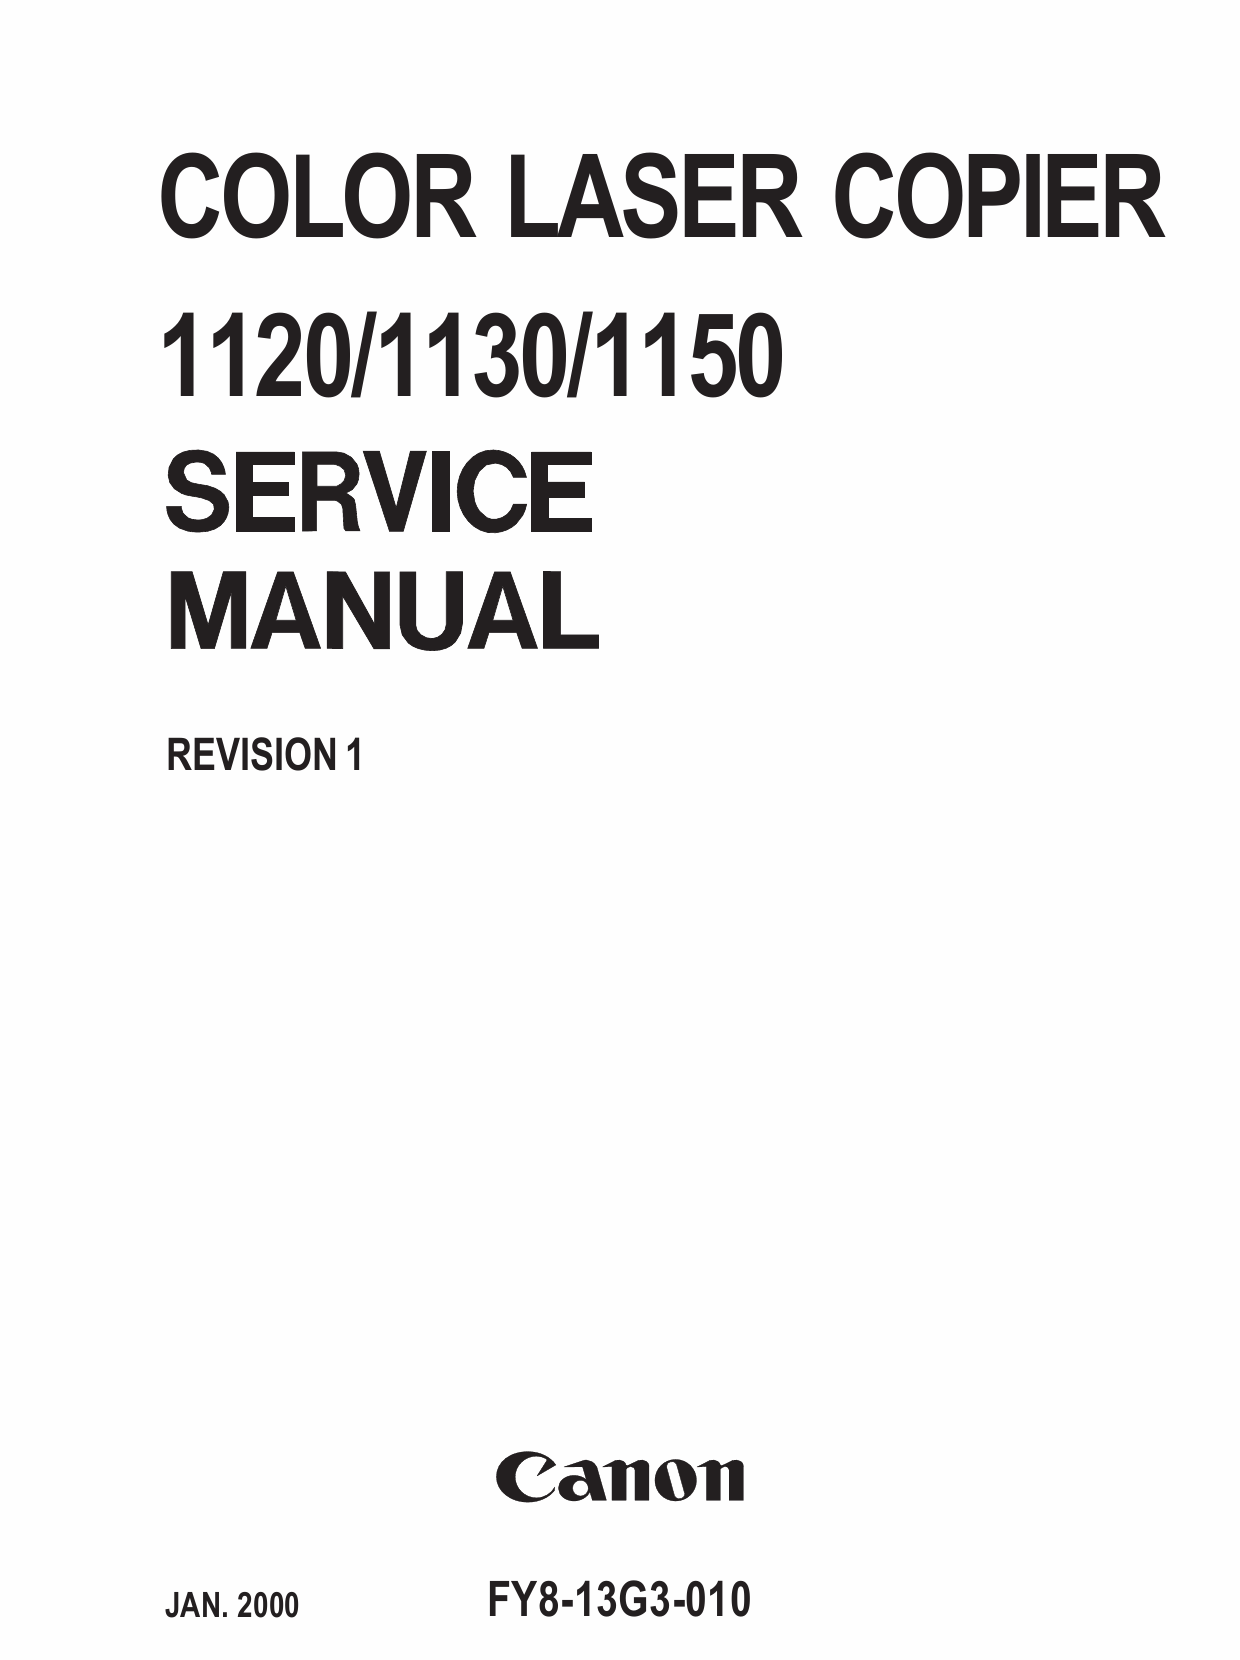 Canon ColorLaserCopier CLC-1120 1130 1150 Parts and Service Manual-1